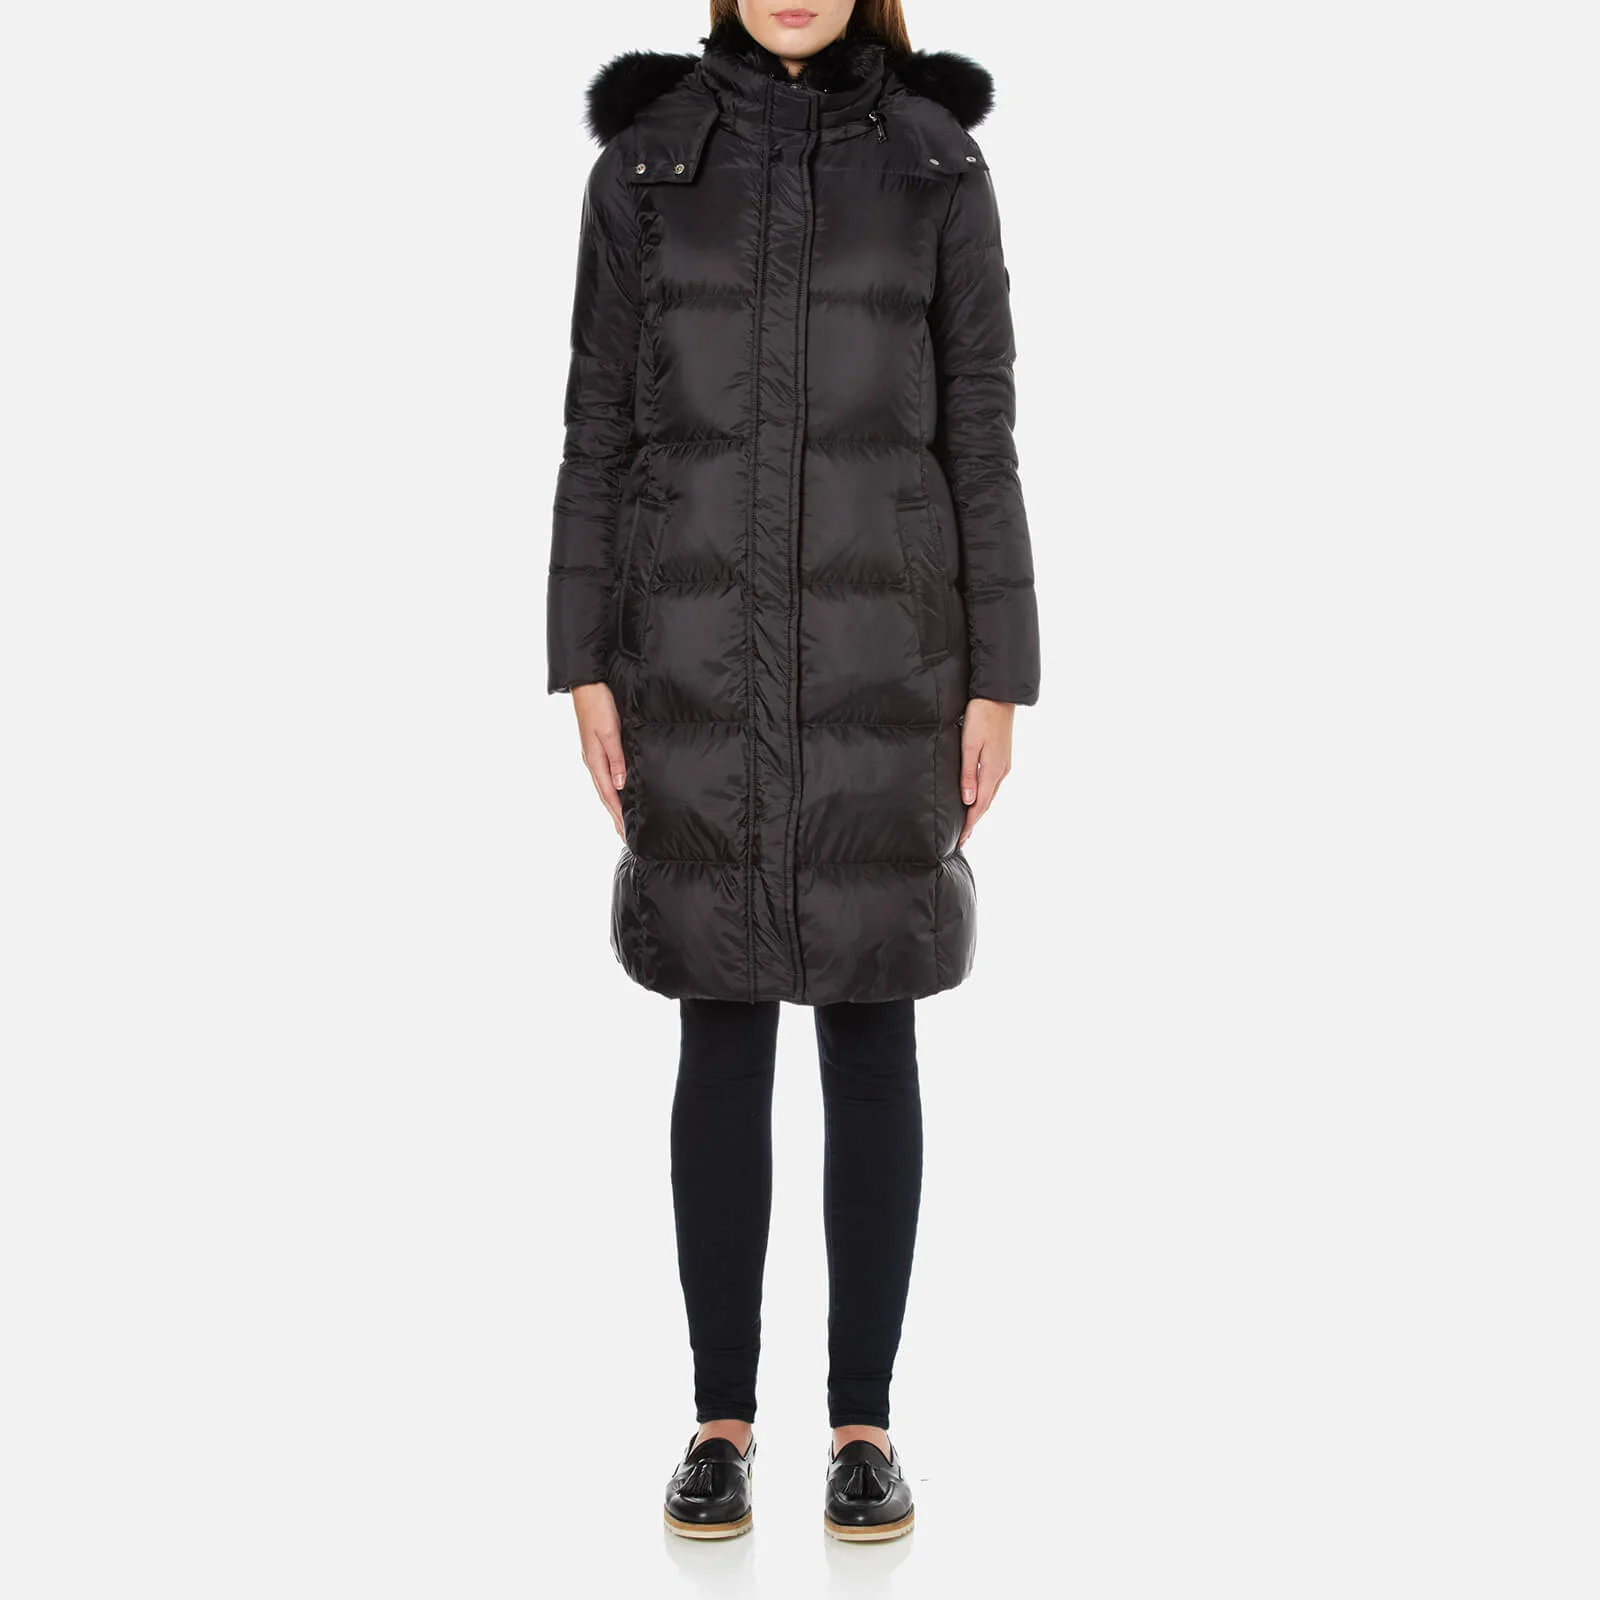 MICHAEL MICHAEL KORS Women's Fur Collar Long Puffa Coat - Black Image 1